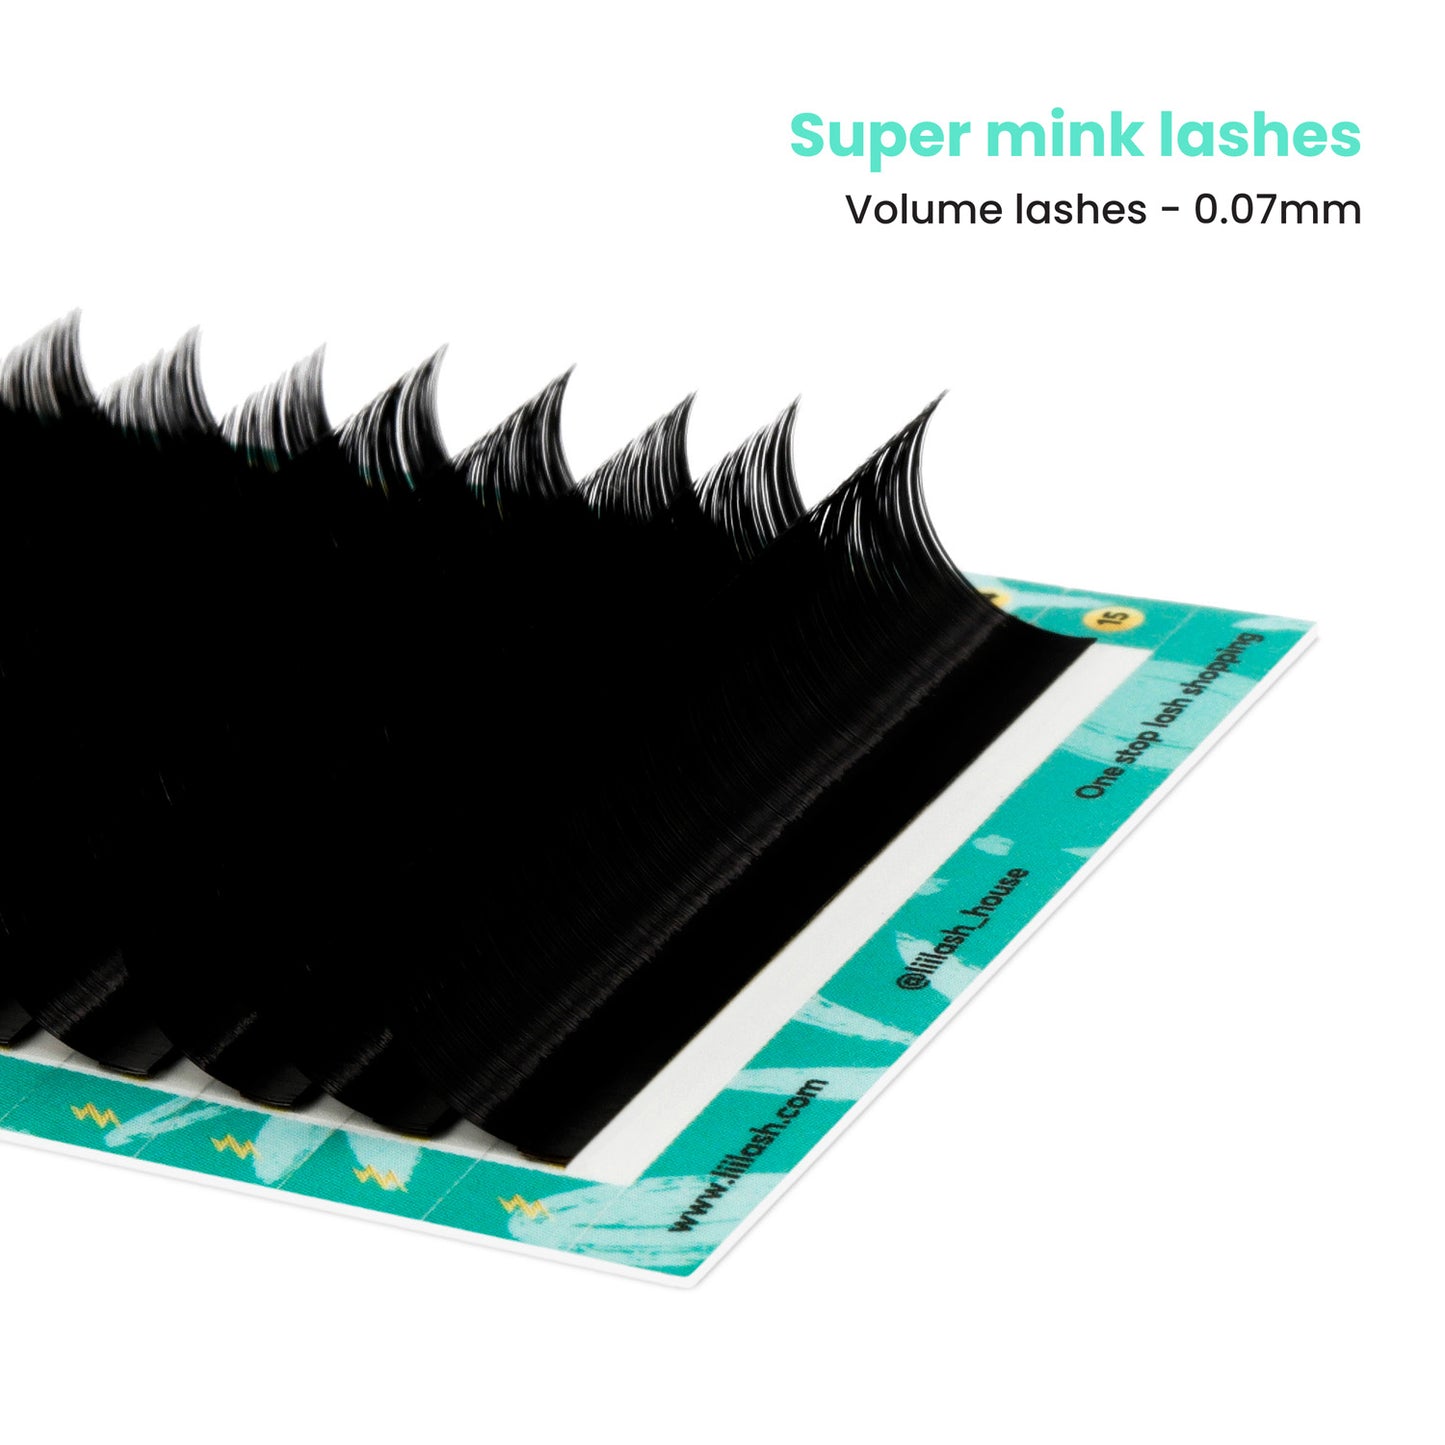 Super-Mink-volume-lashes-0.07mm